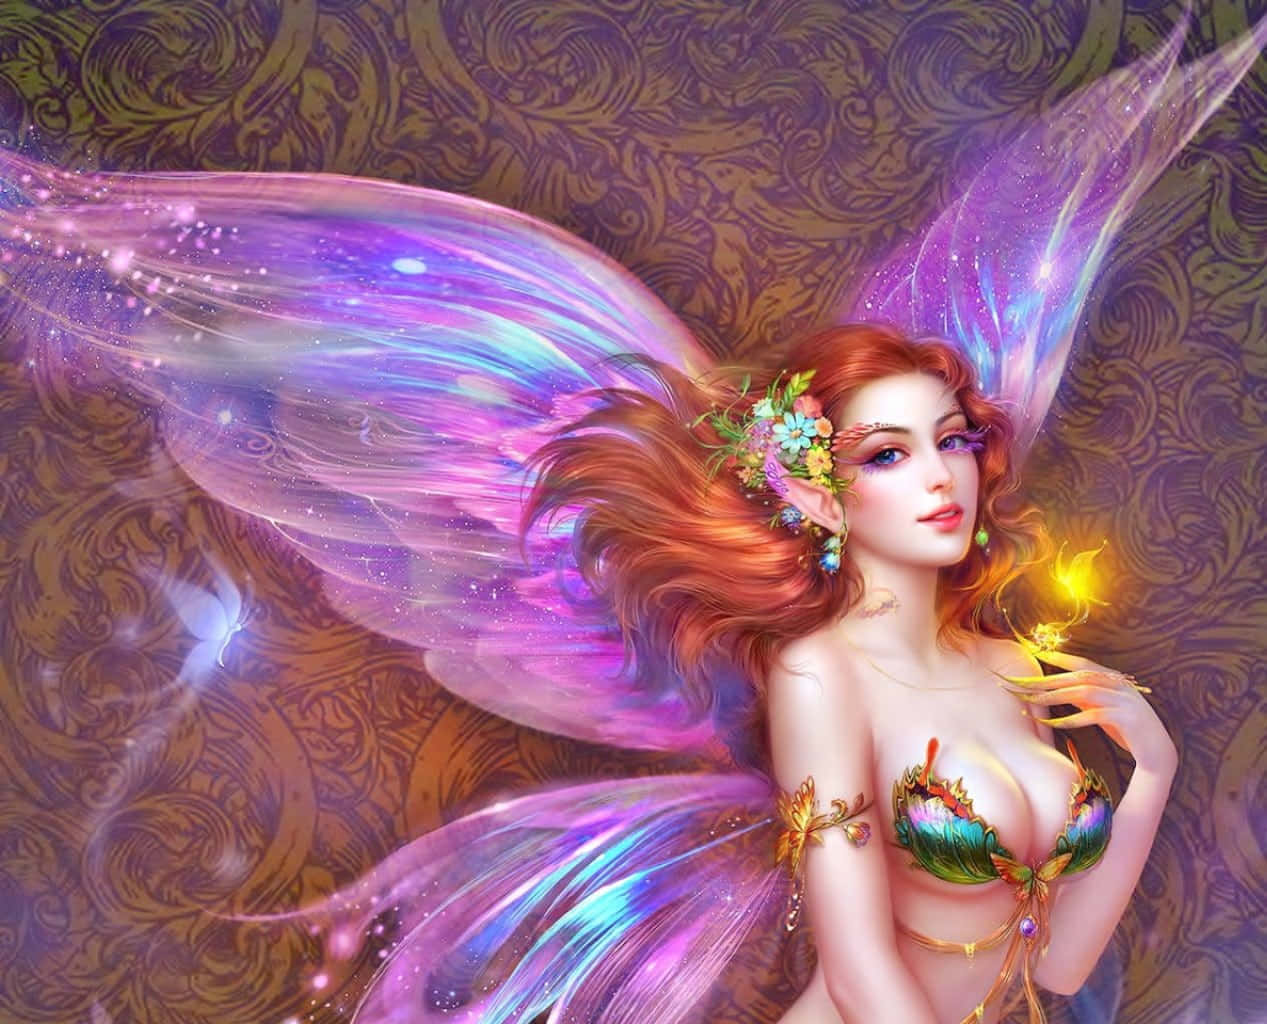 Experience a magical fairy scene